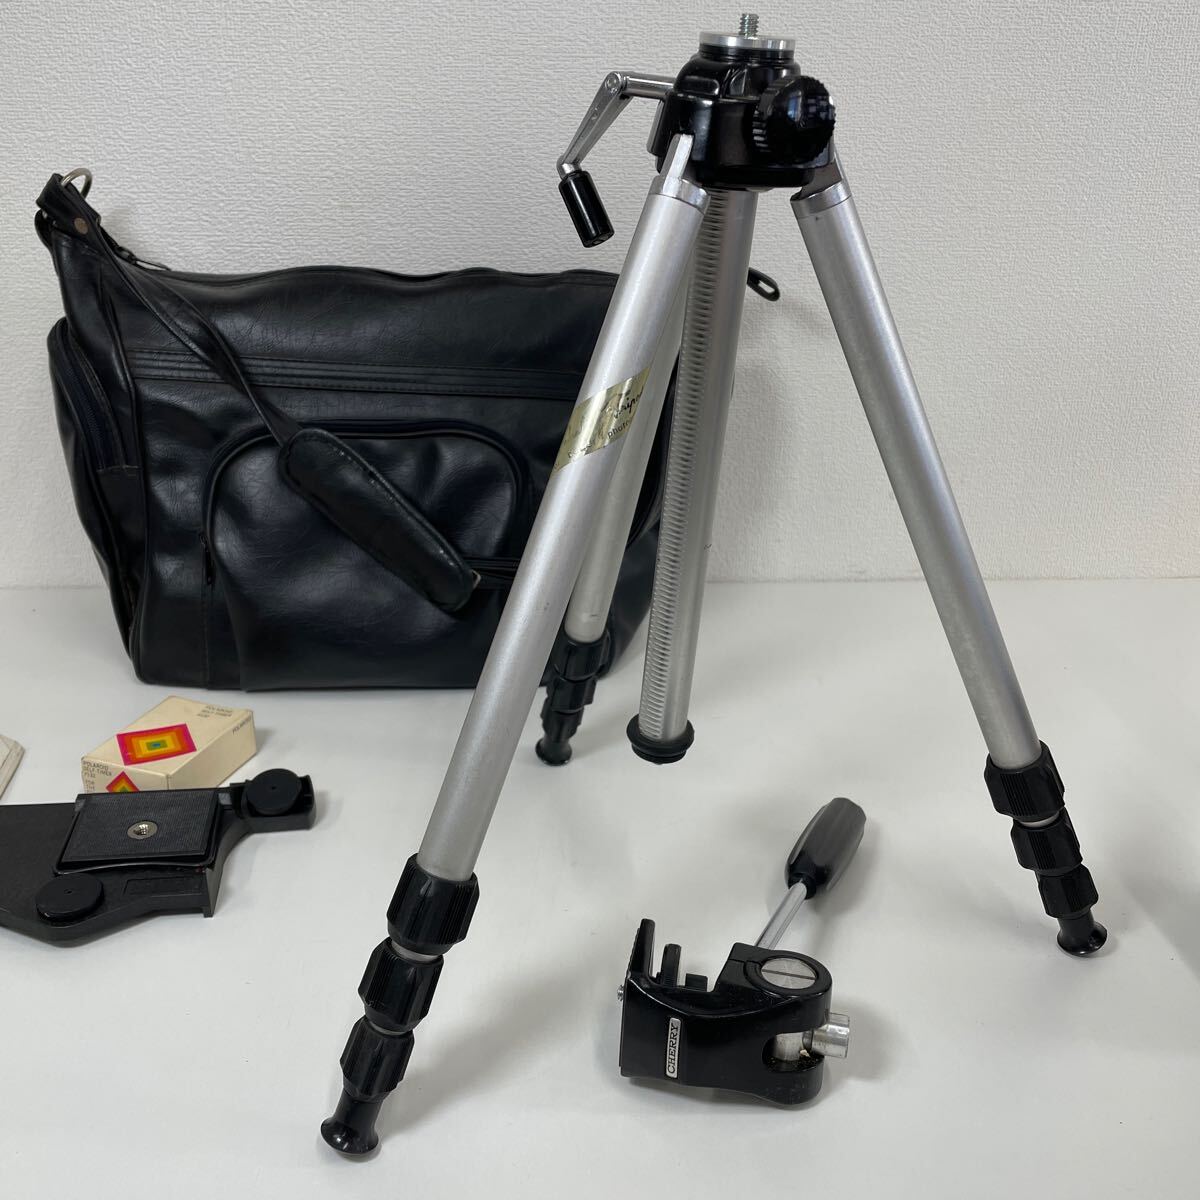 Z◎ FUJICA フジカ Single-8 P105 8mm カメラ FLASH POLATRONIC POLAROID ポラロイド フラッシュ CHERRY チェリー DASH 3H-G 3段三脚の画像9